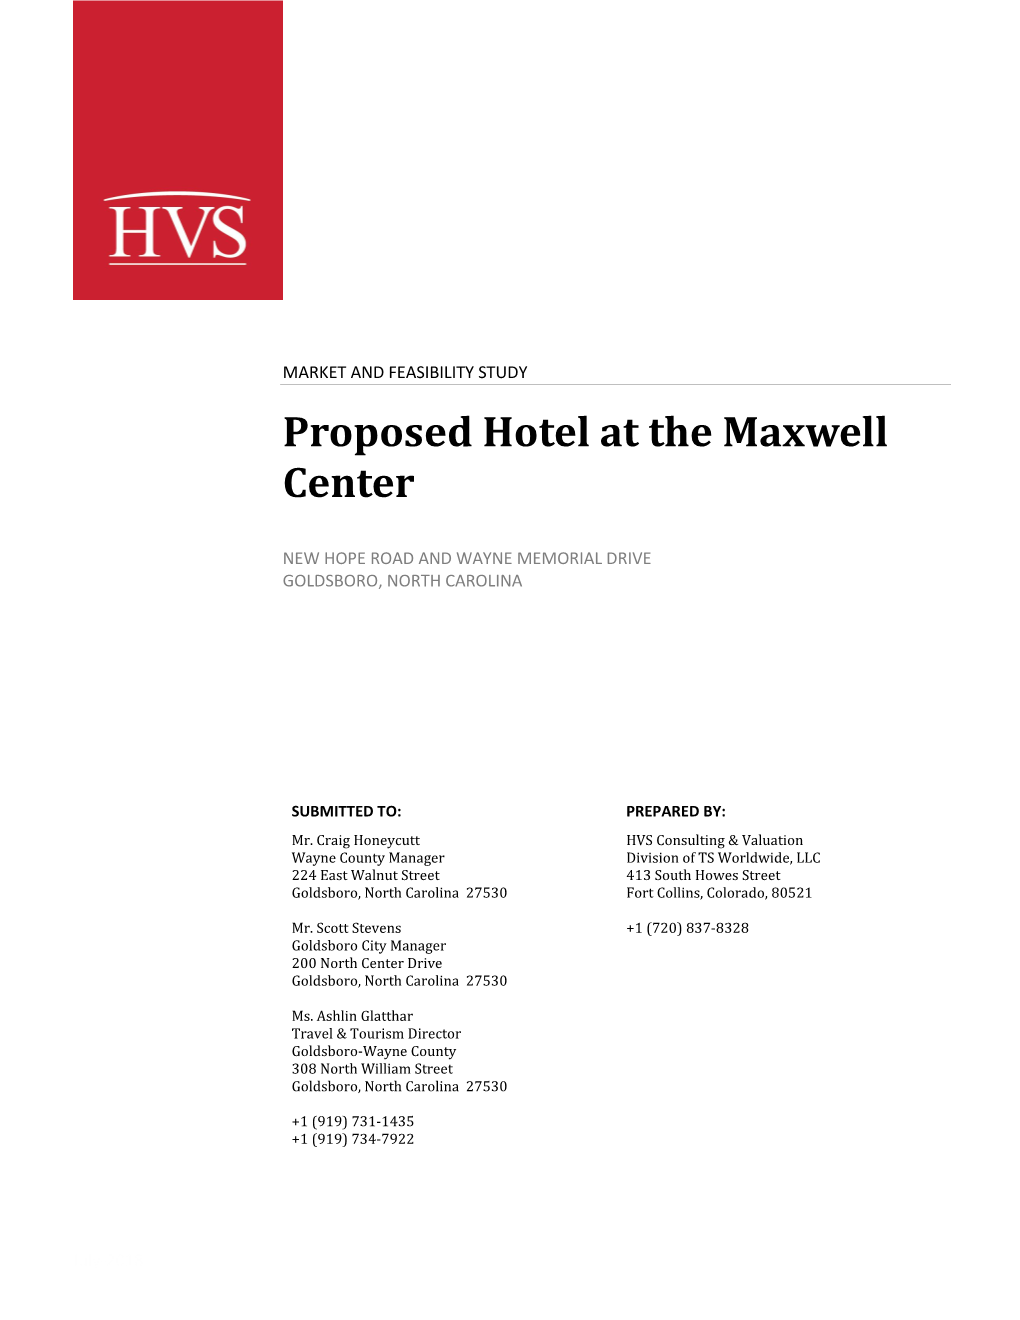 Proposed Hotel at the Maxwell Center Goldsboro, North Carolina HVS Reference: 2018020662, 2018250019